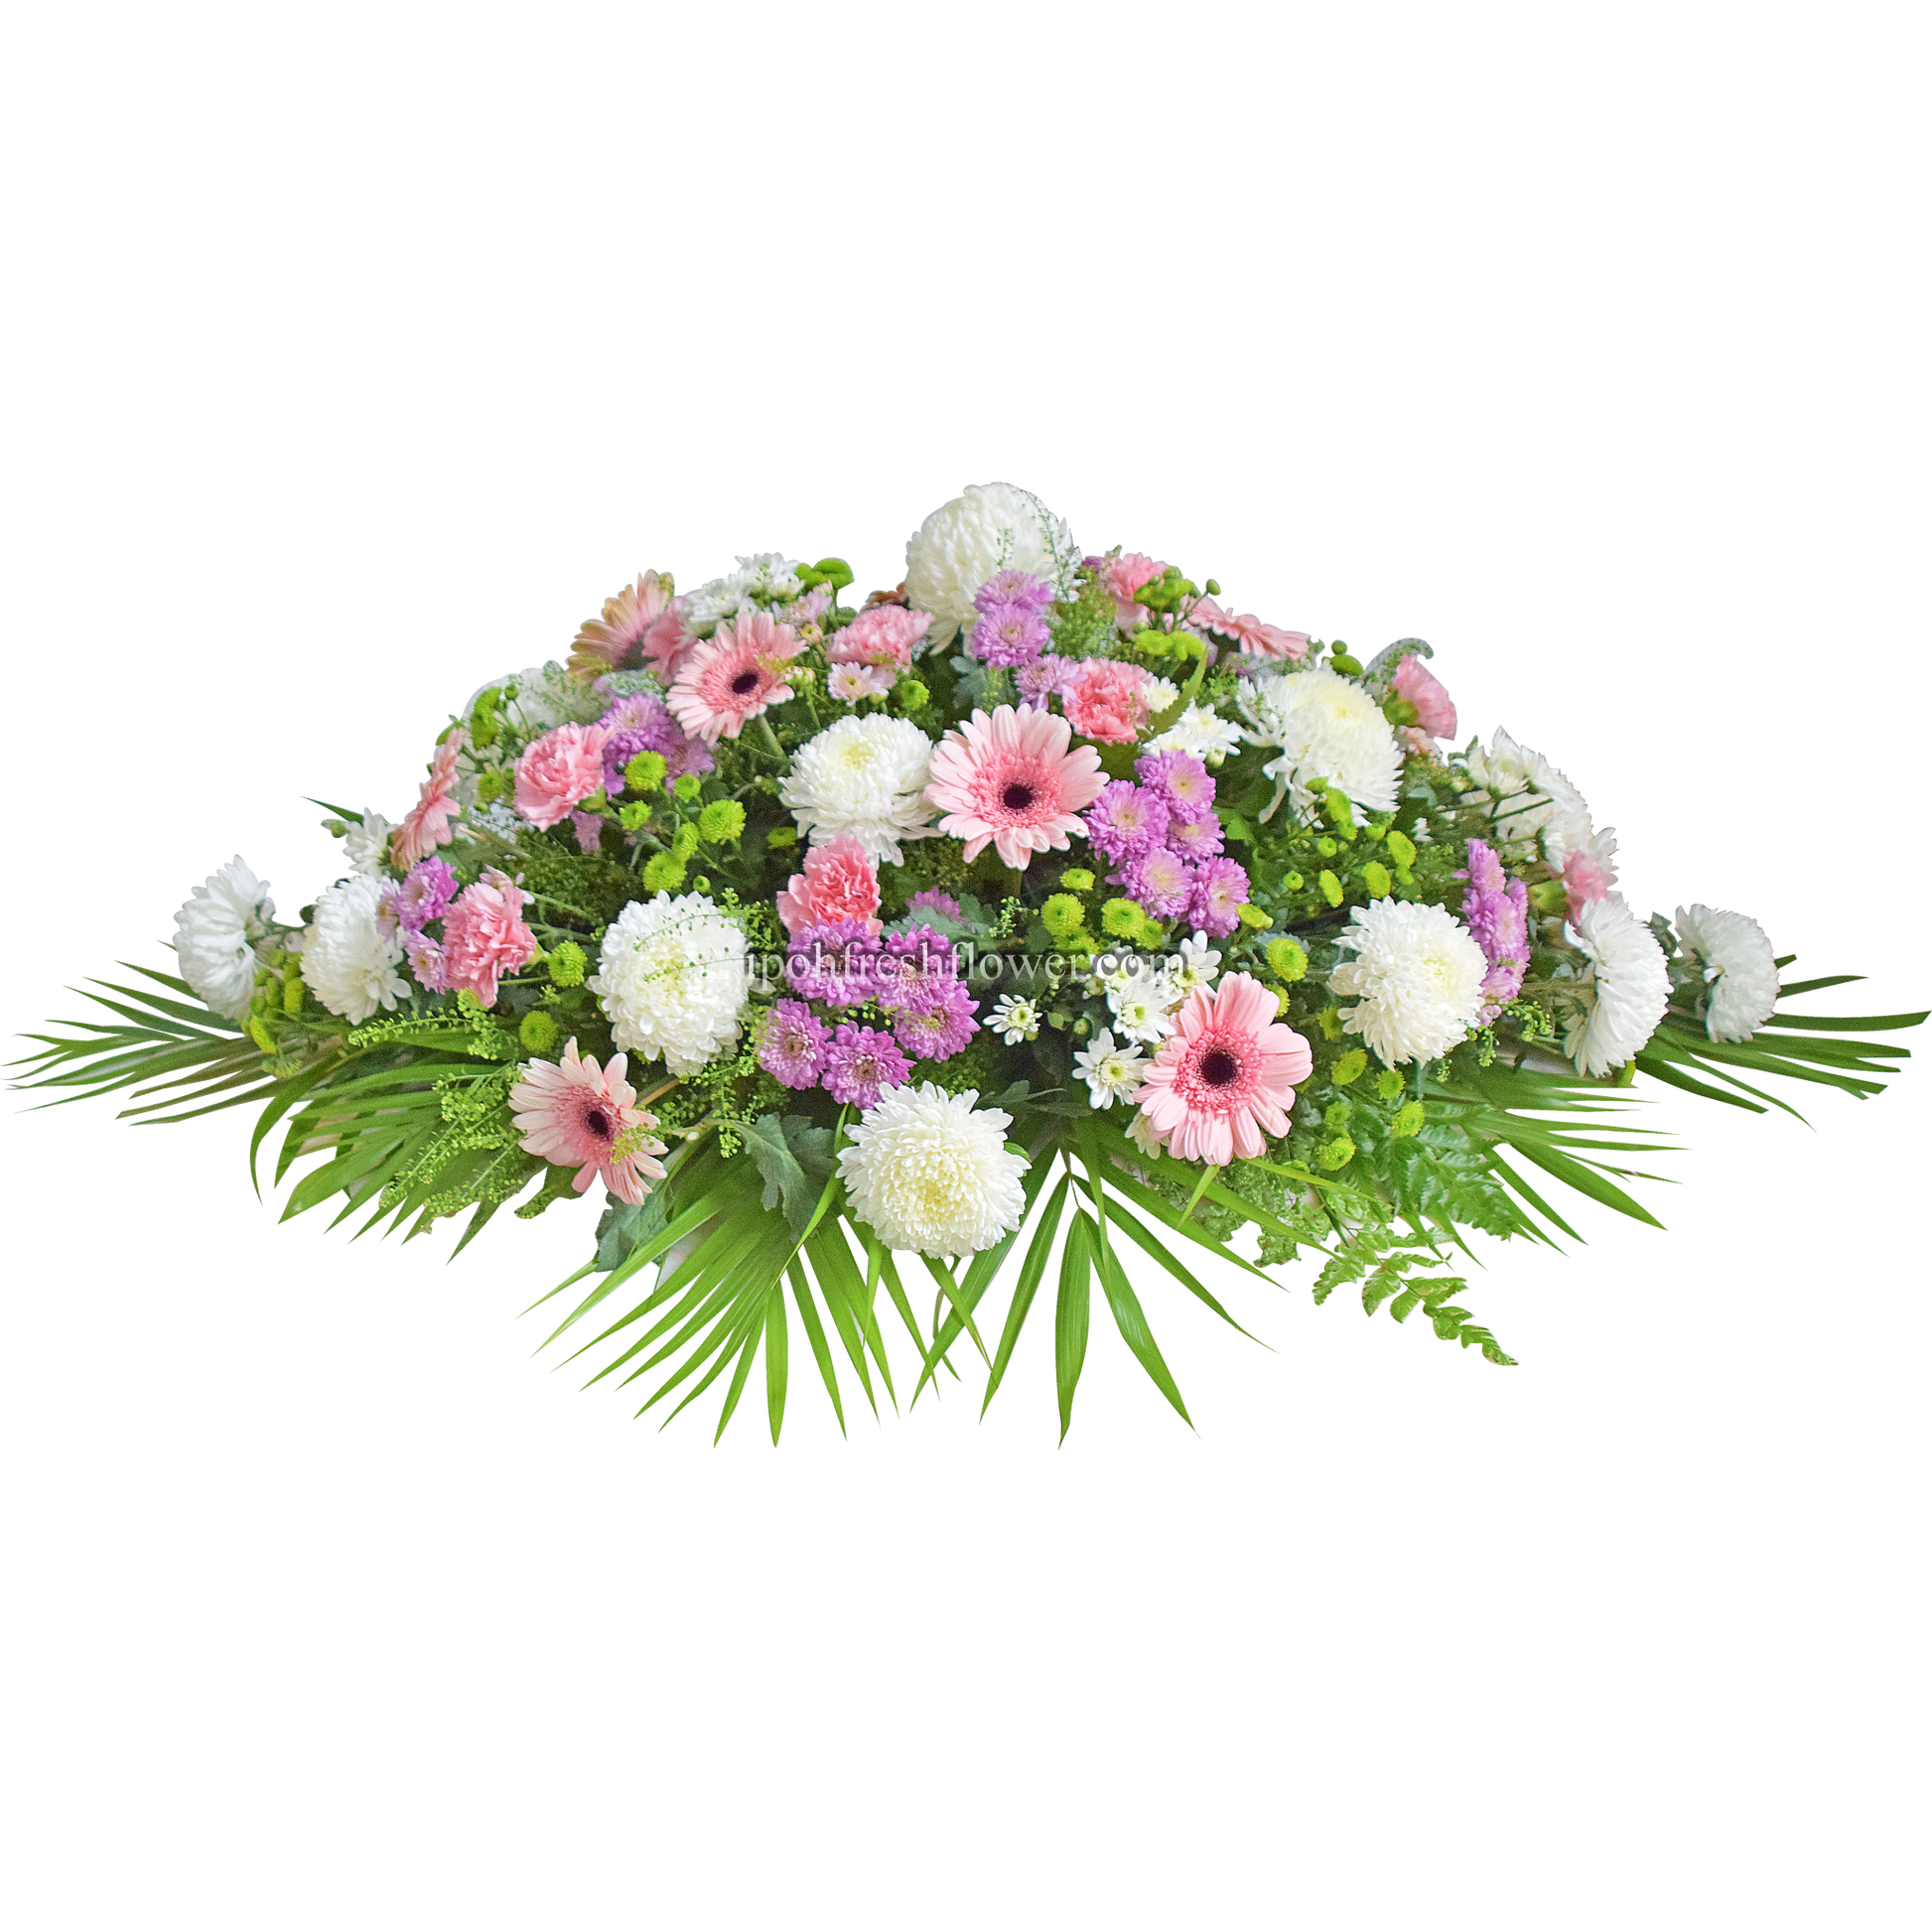 Serene Rest Casket| Wreath Funeral Flower